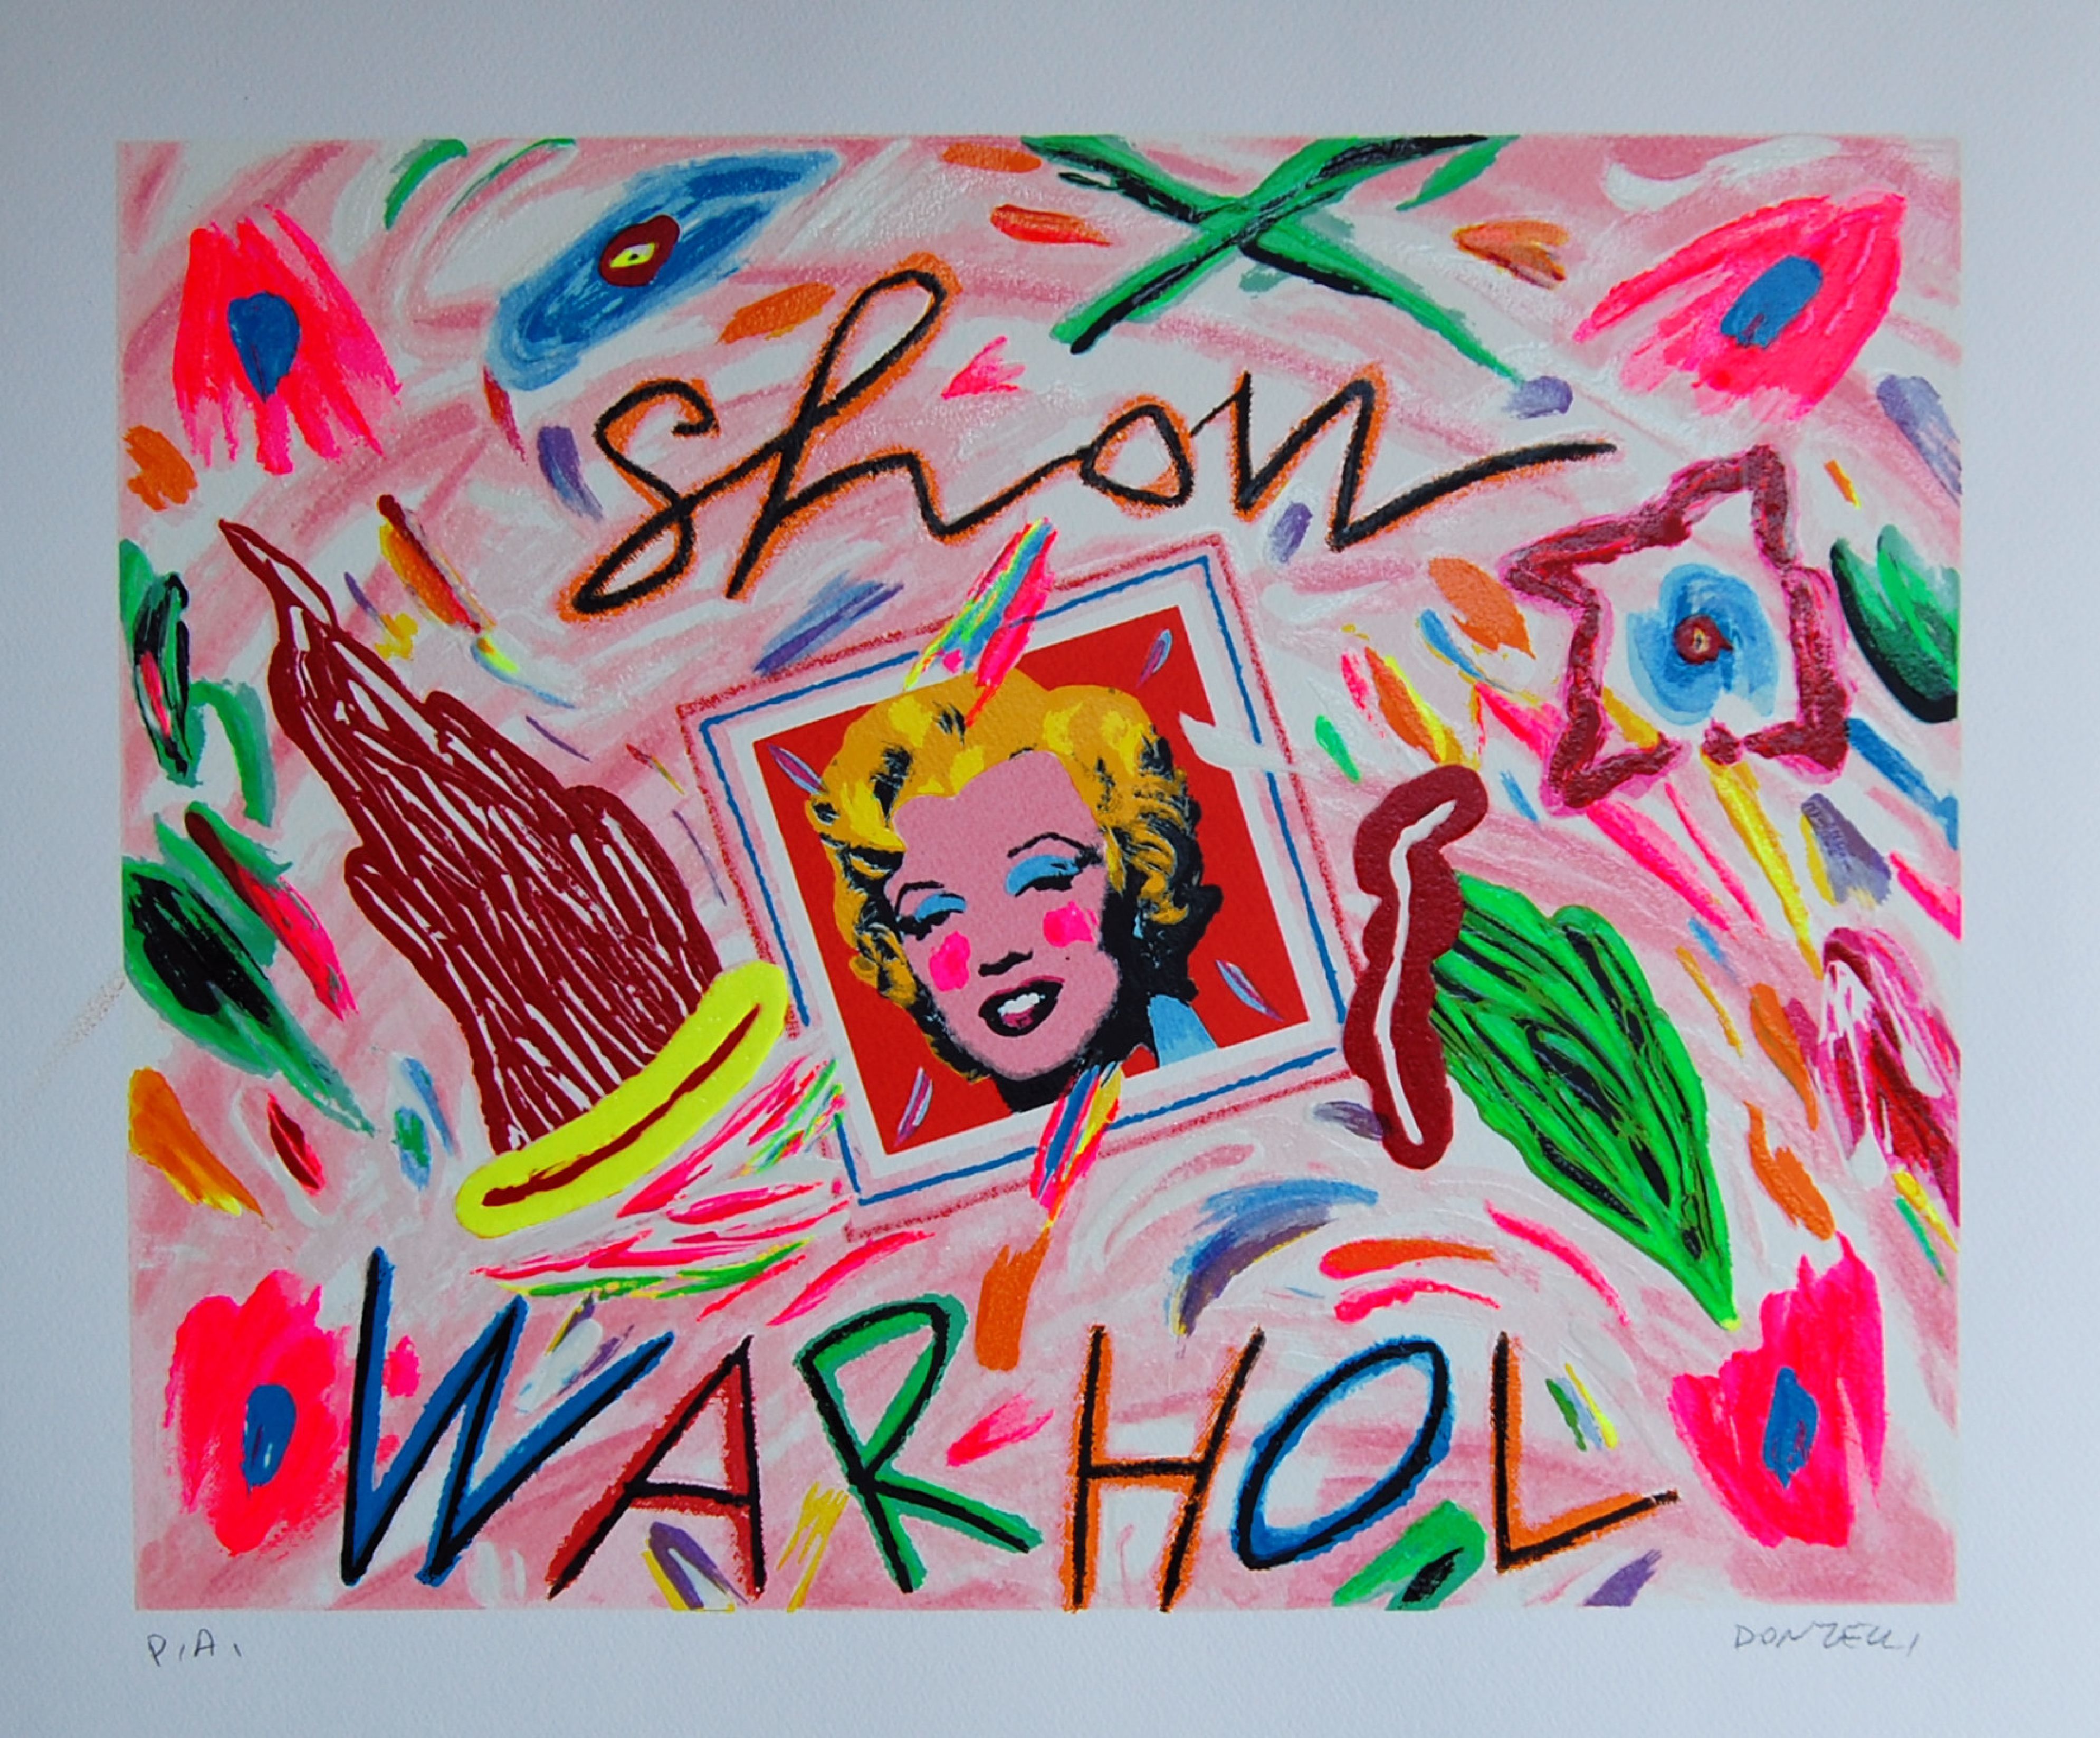 Donzelli Bruno - Show Warhol